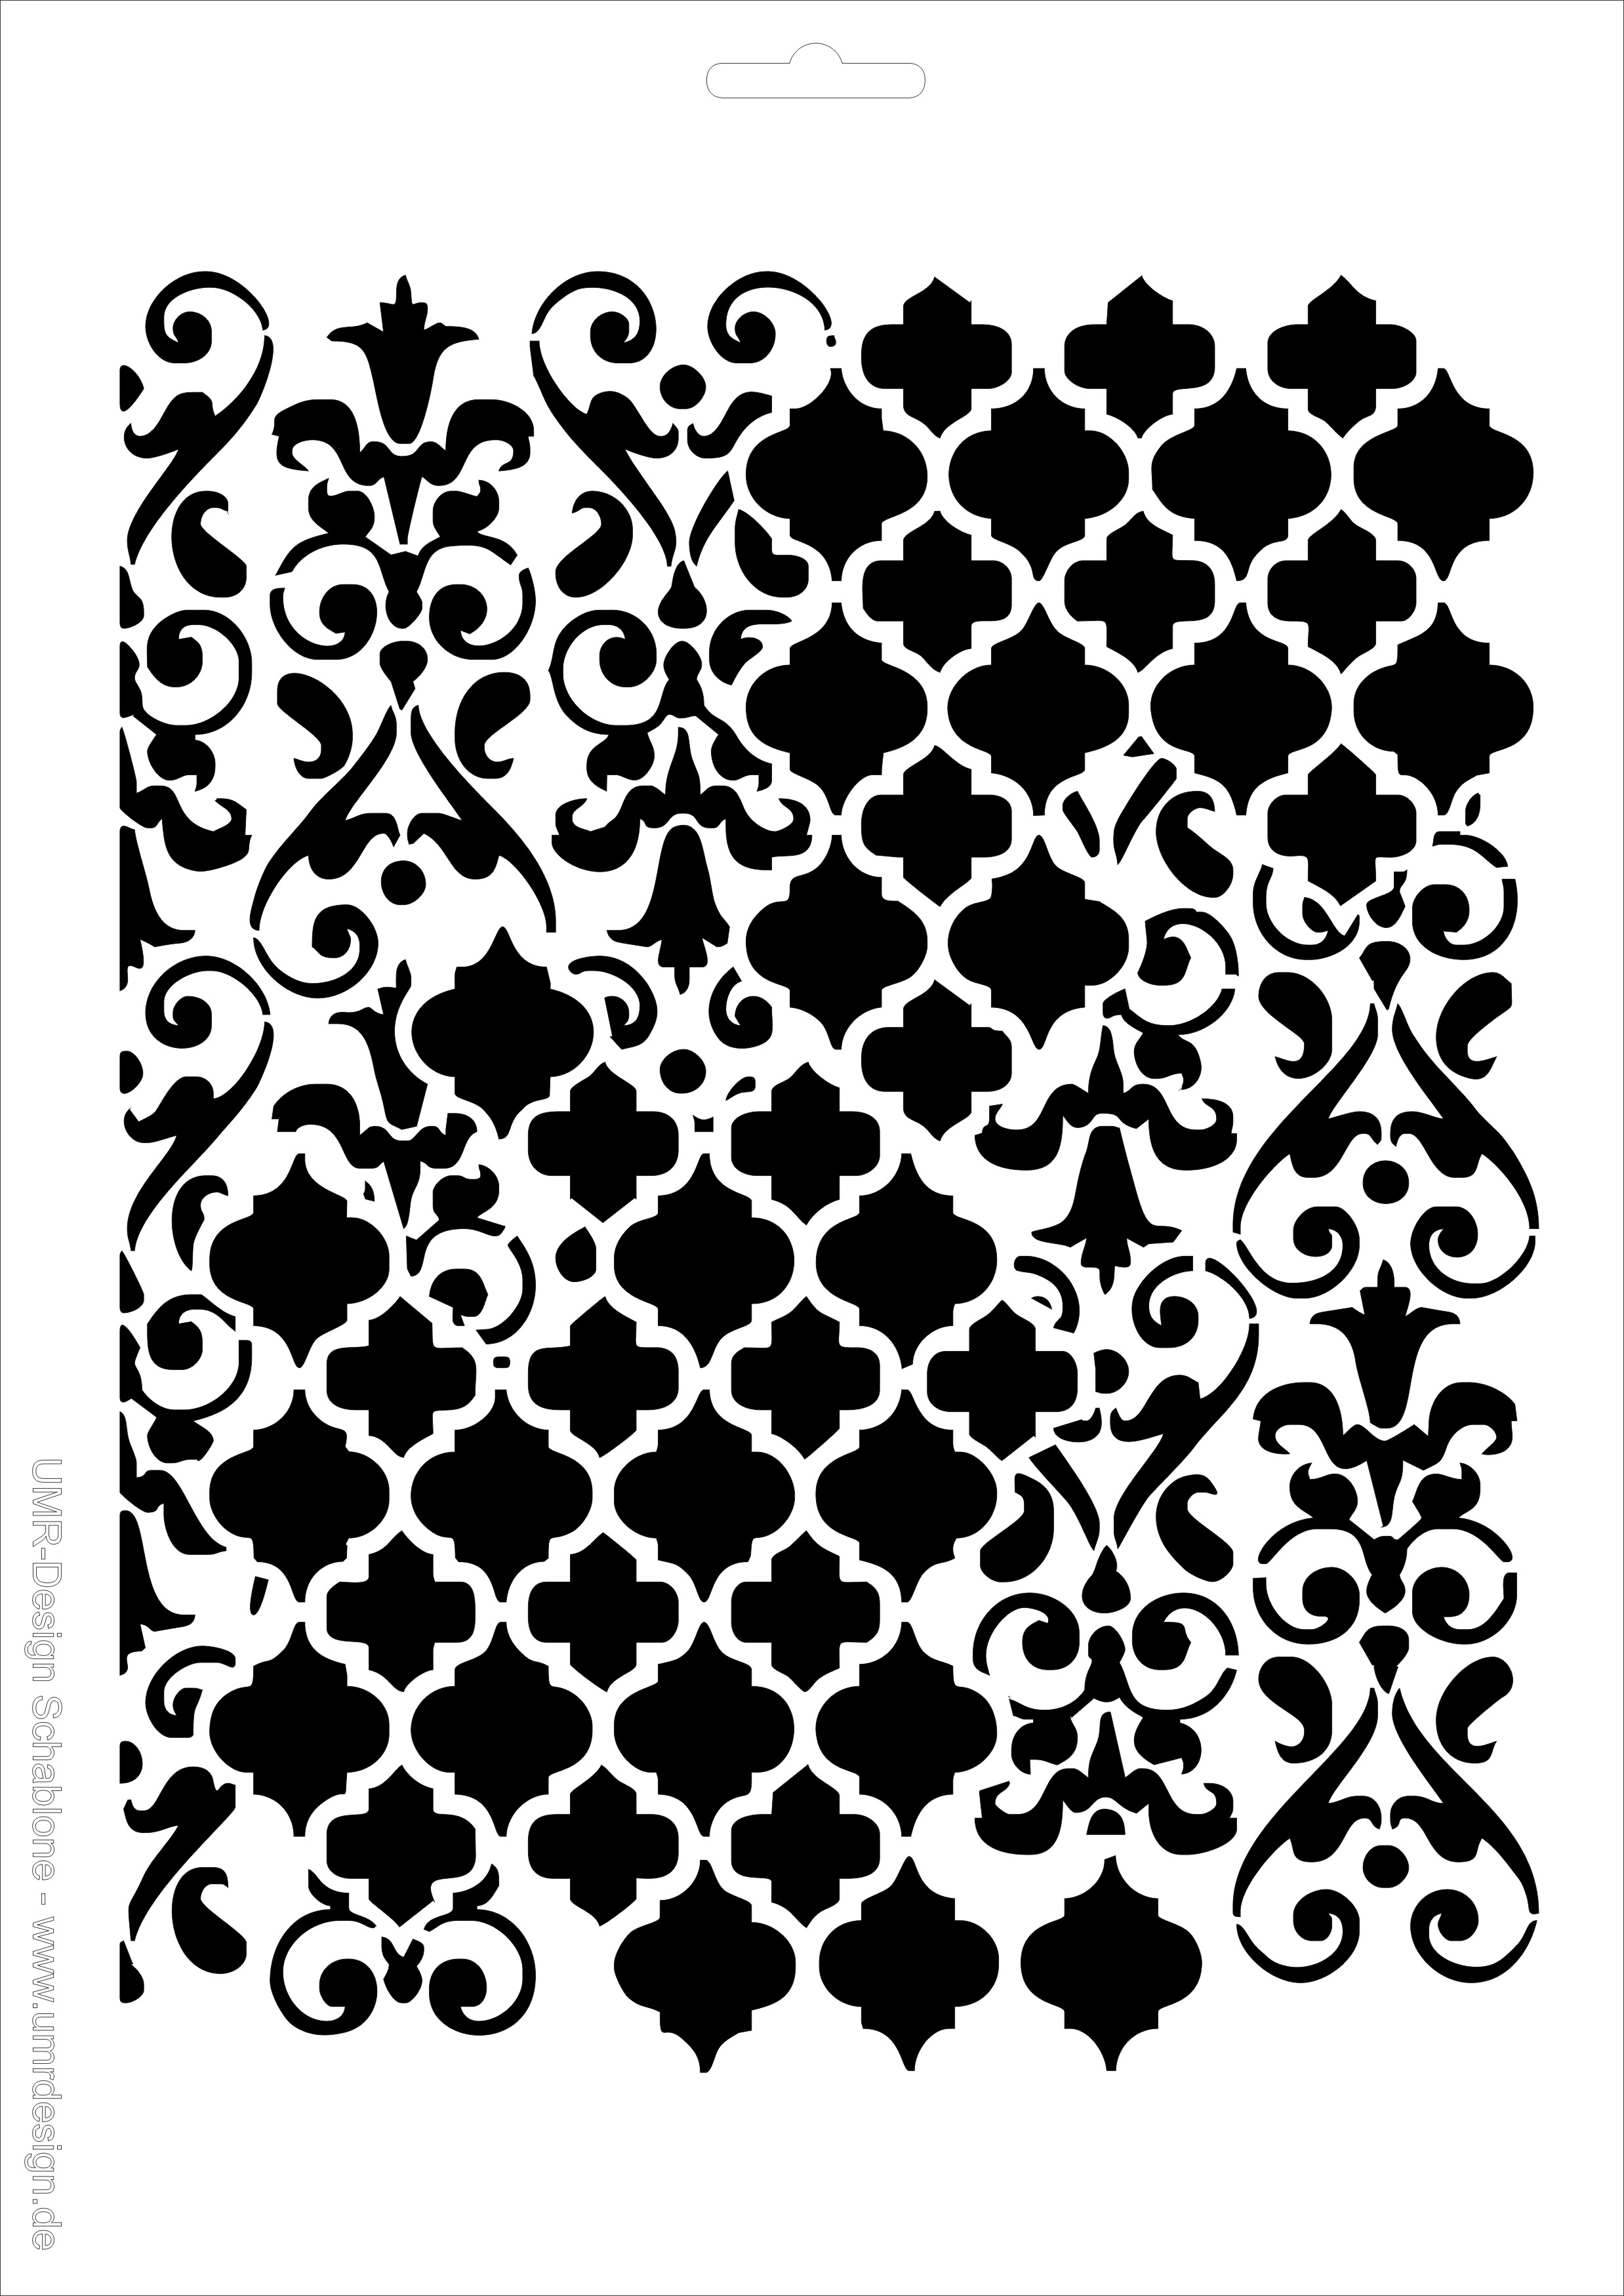 W-685 Ornamente Wandschablone Textilschablone Größe A5